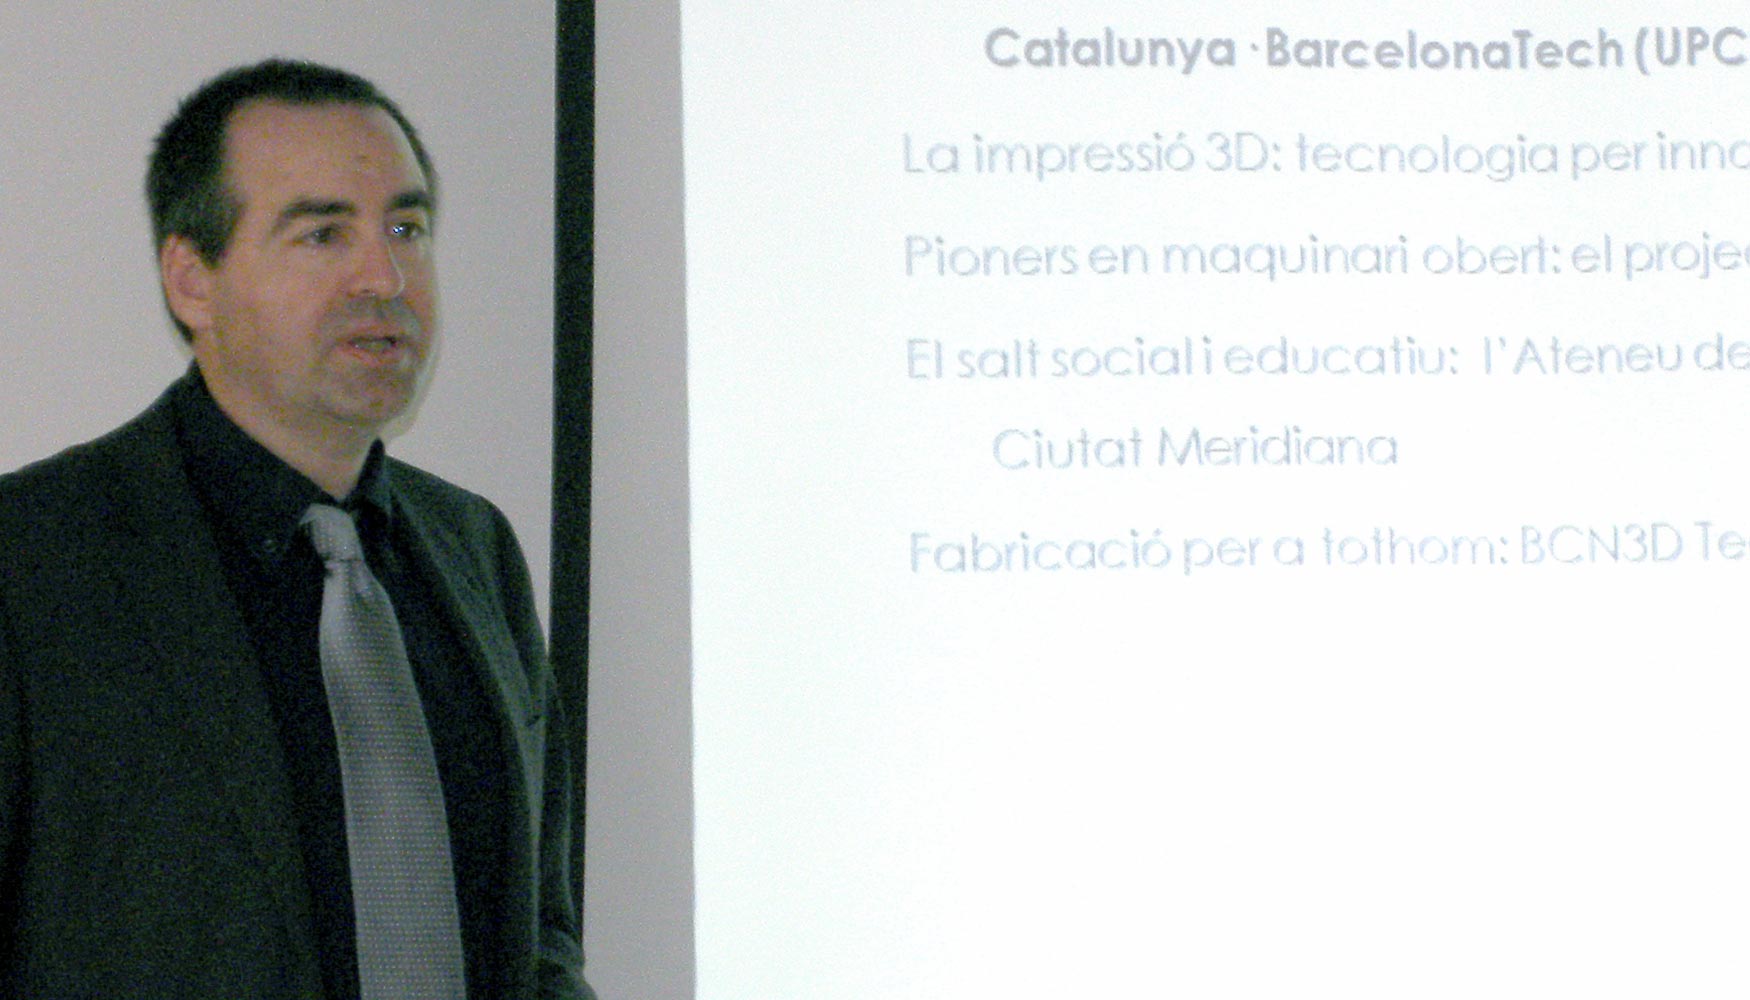 Felip Fenollosa, director de Fundaci CIM-UPC, expuso los objetivos de la nueva divisin BCN3D Technologies